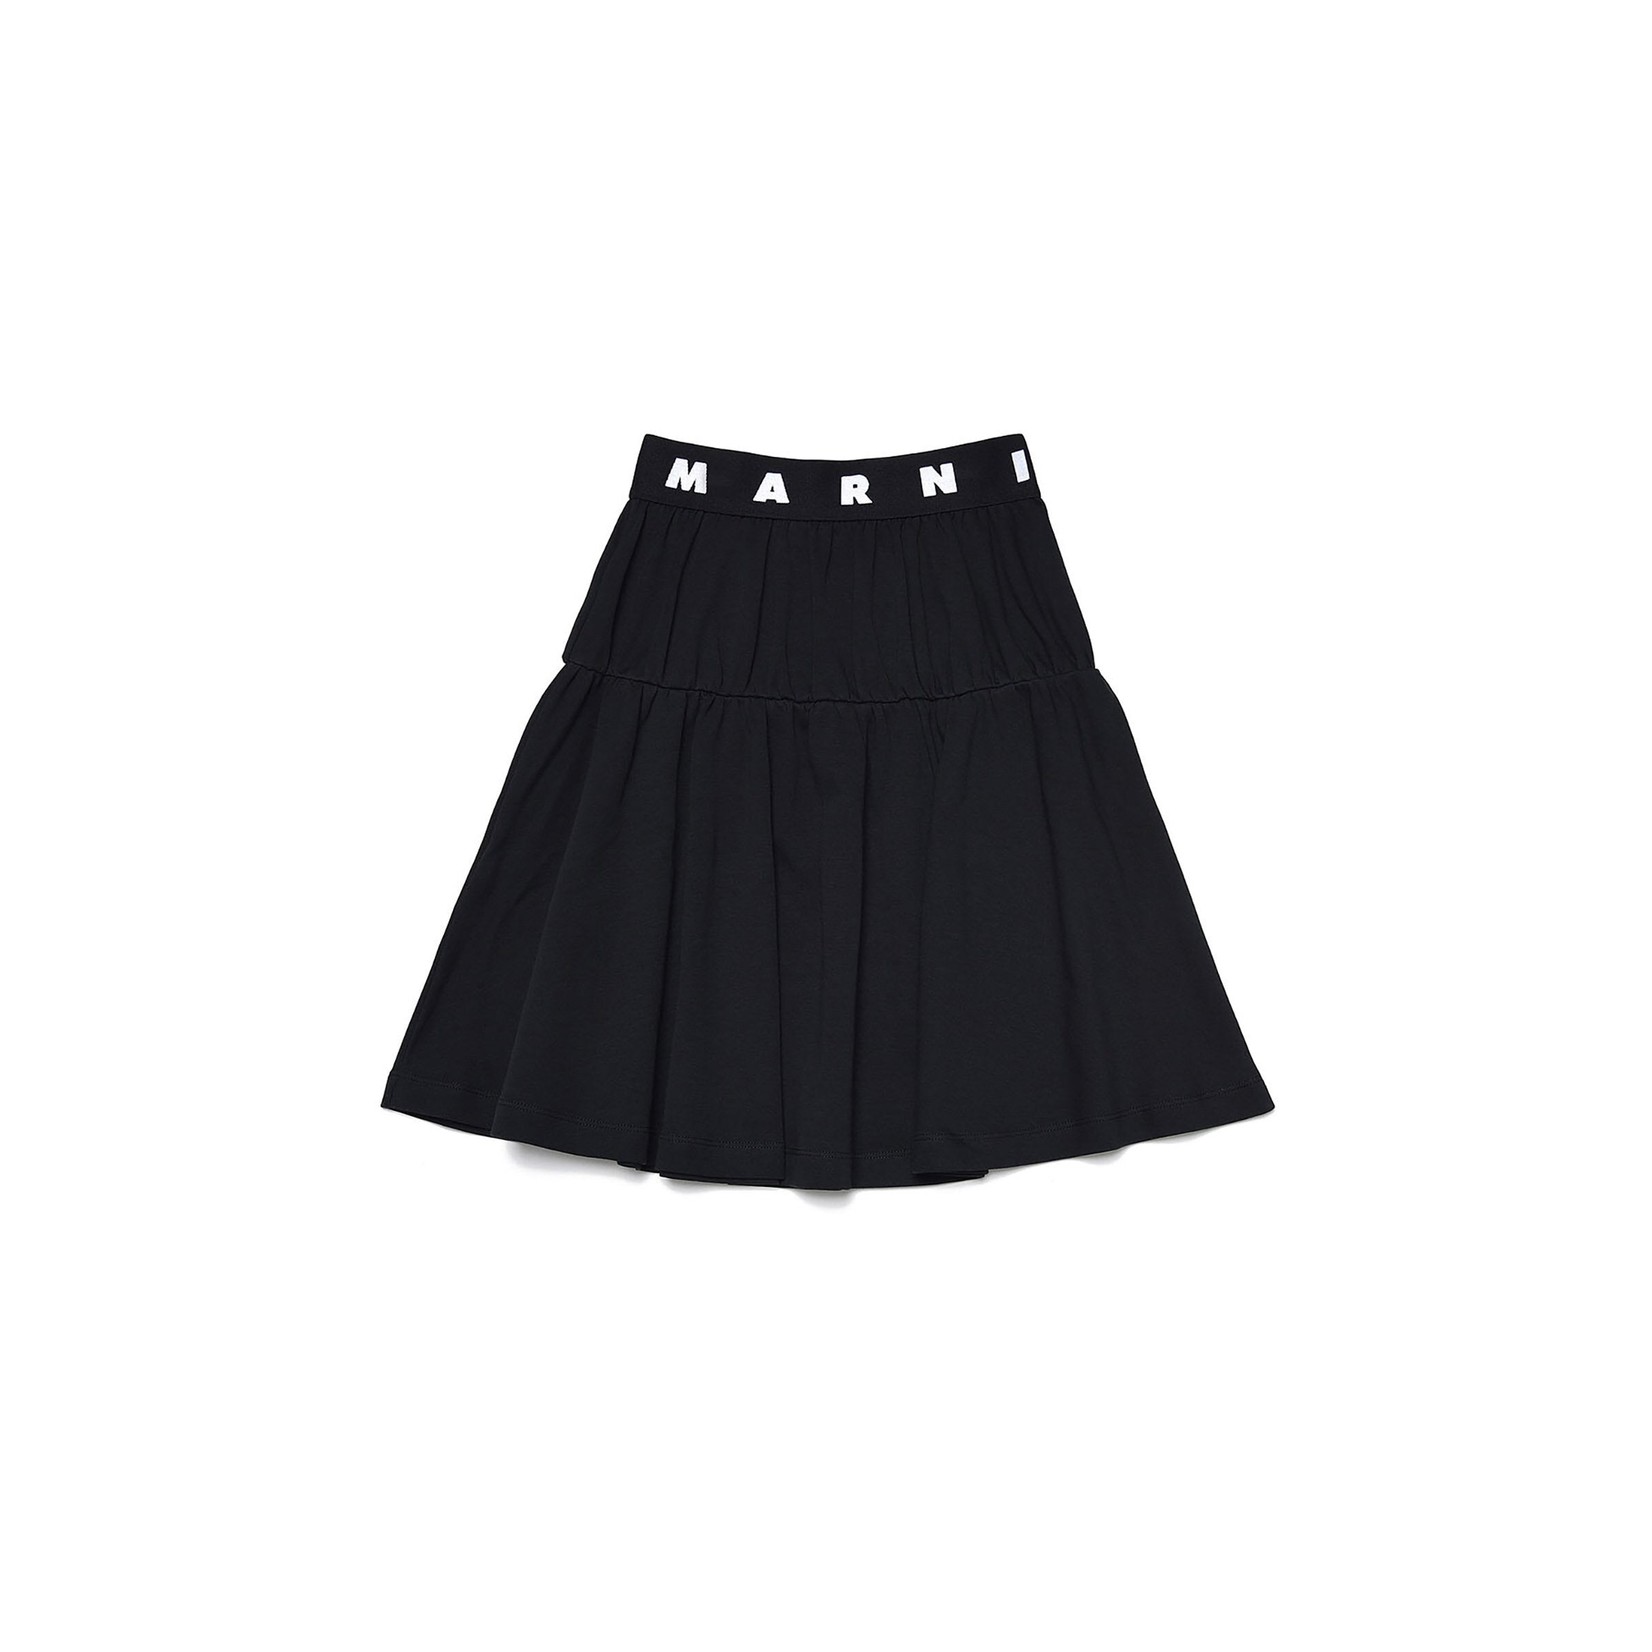 Marni Marni - Black skirt with maxi flounce and logoed elastic waist